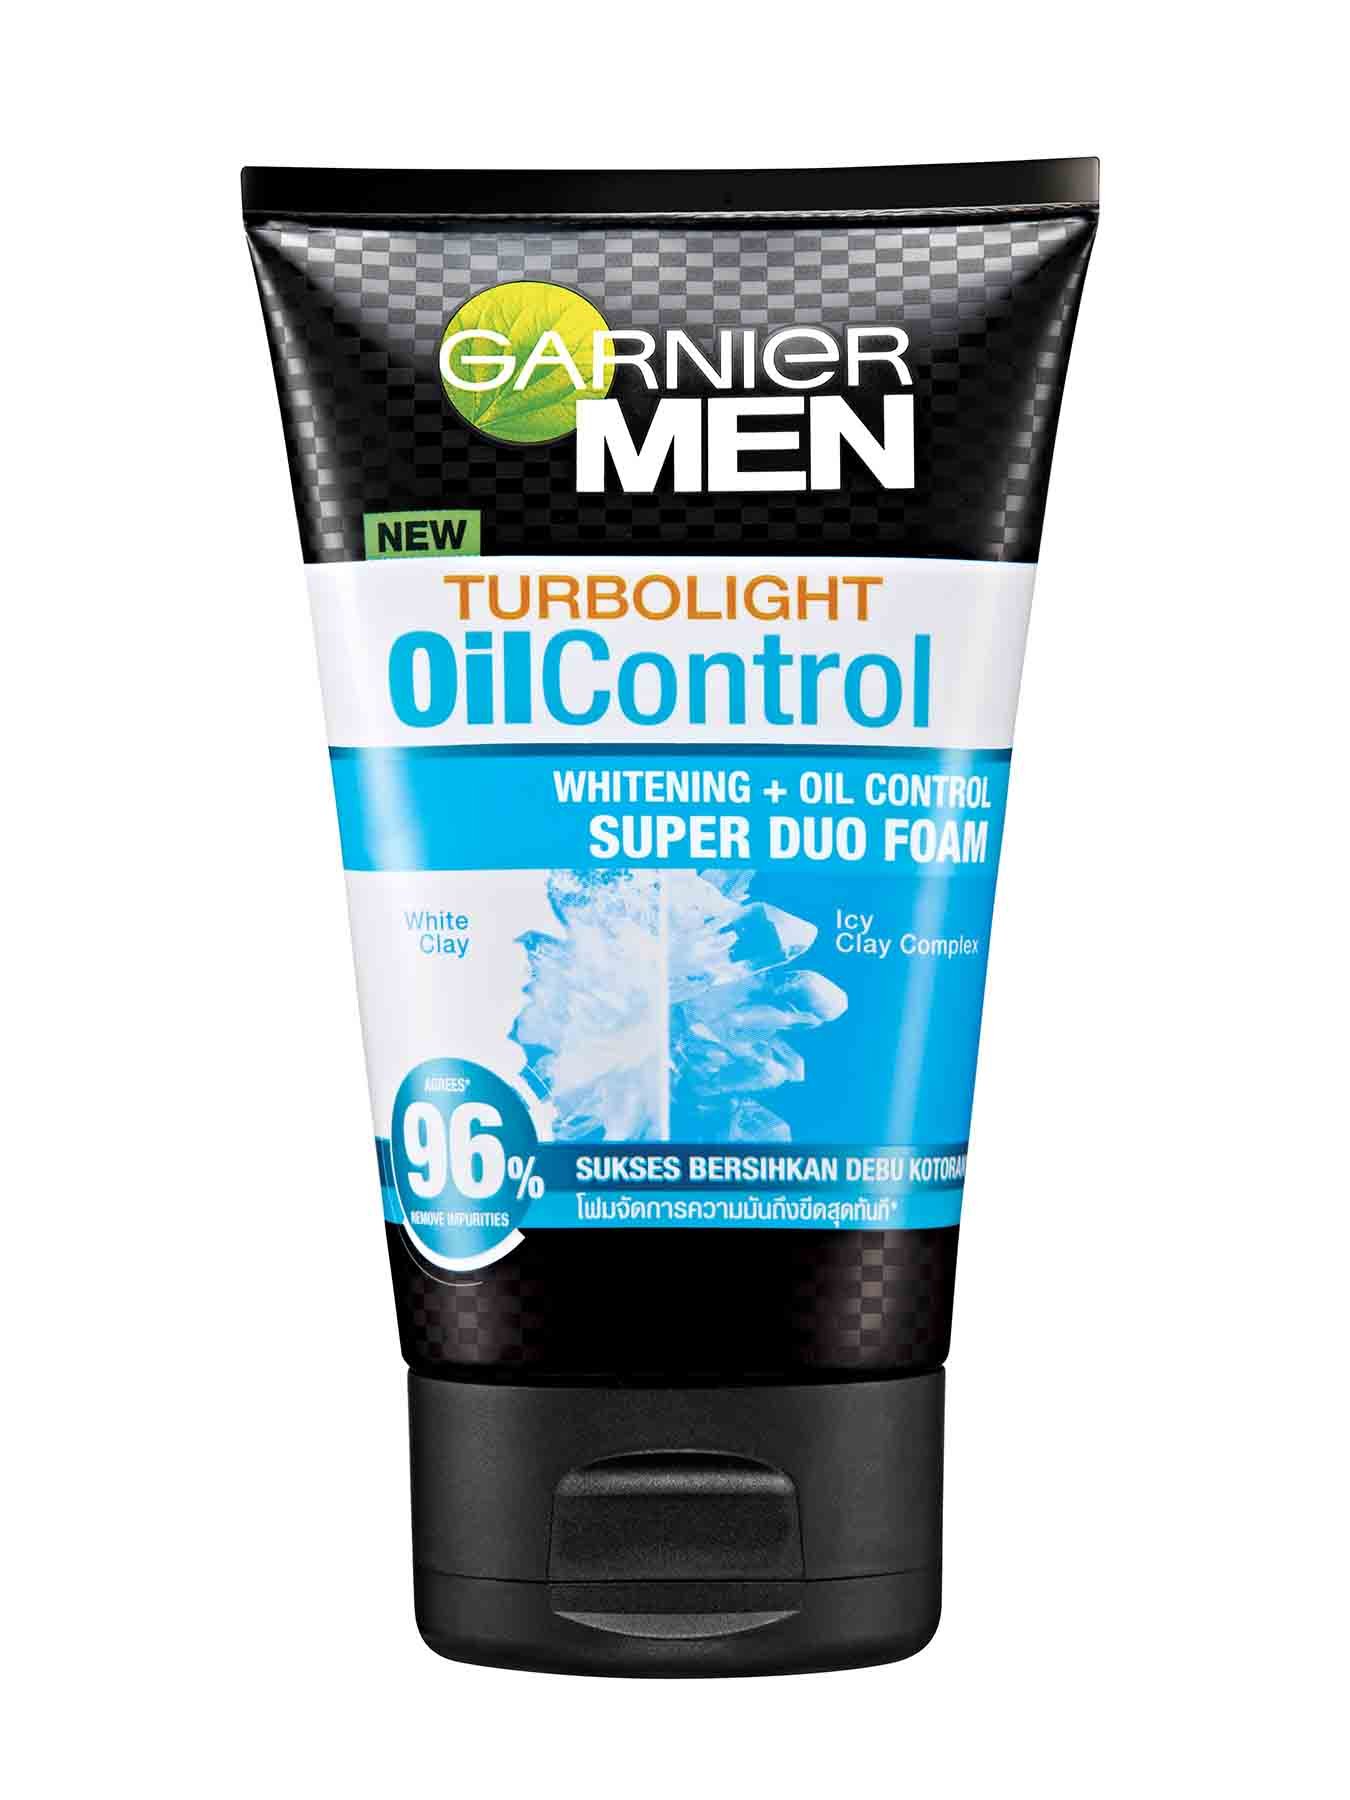 garnier men turbo light oil control whitening oil control super duo foam